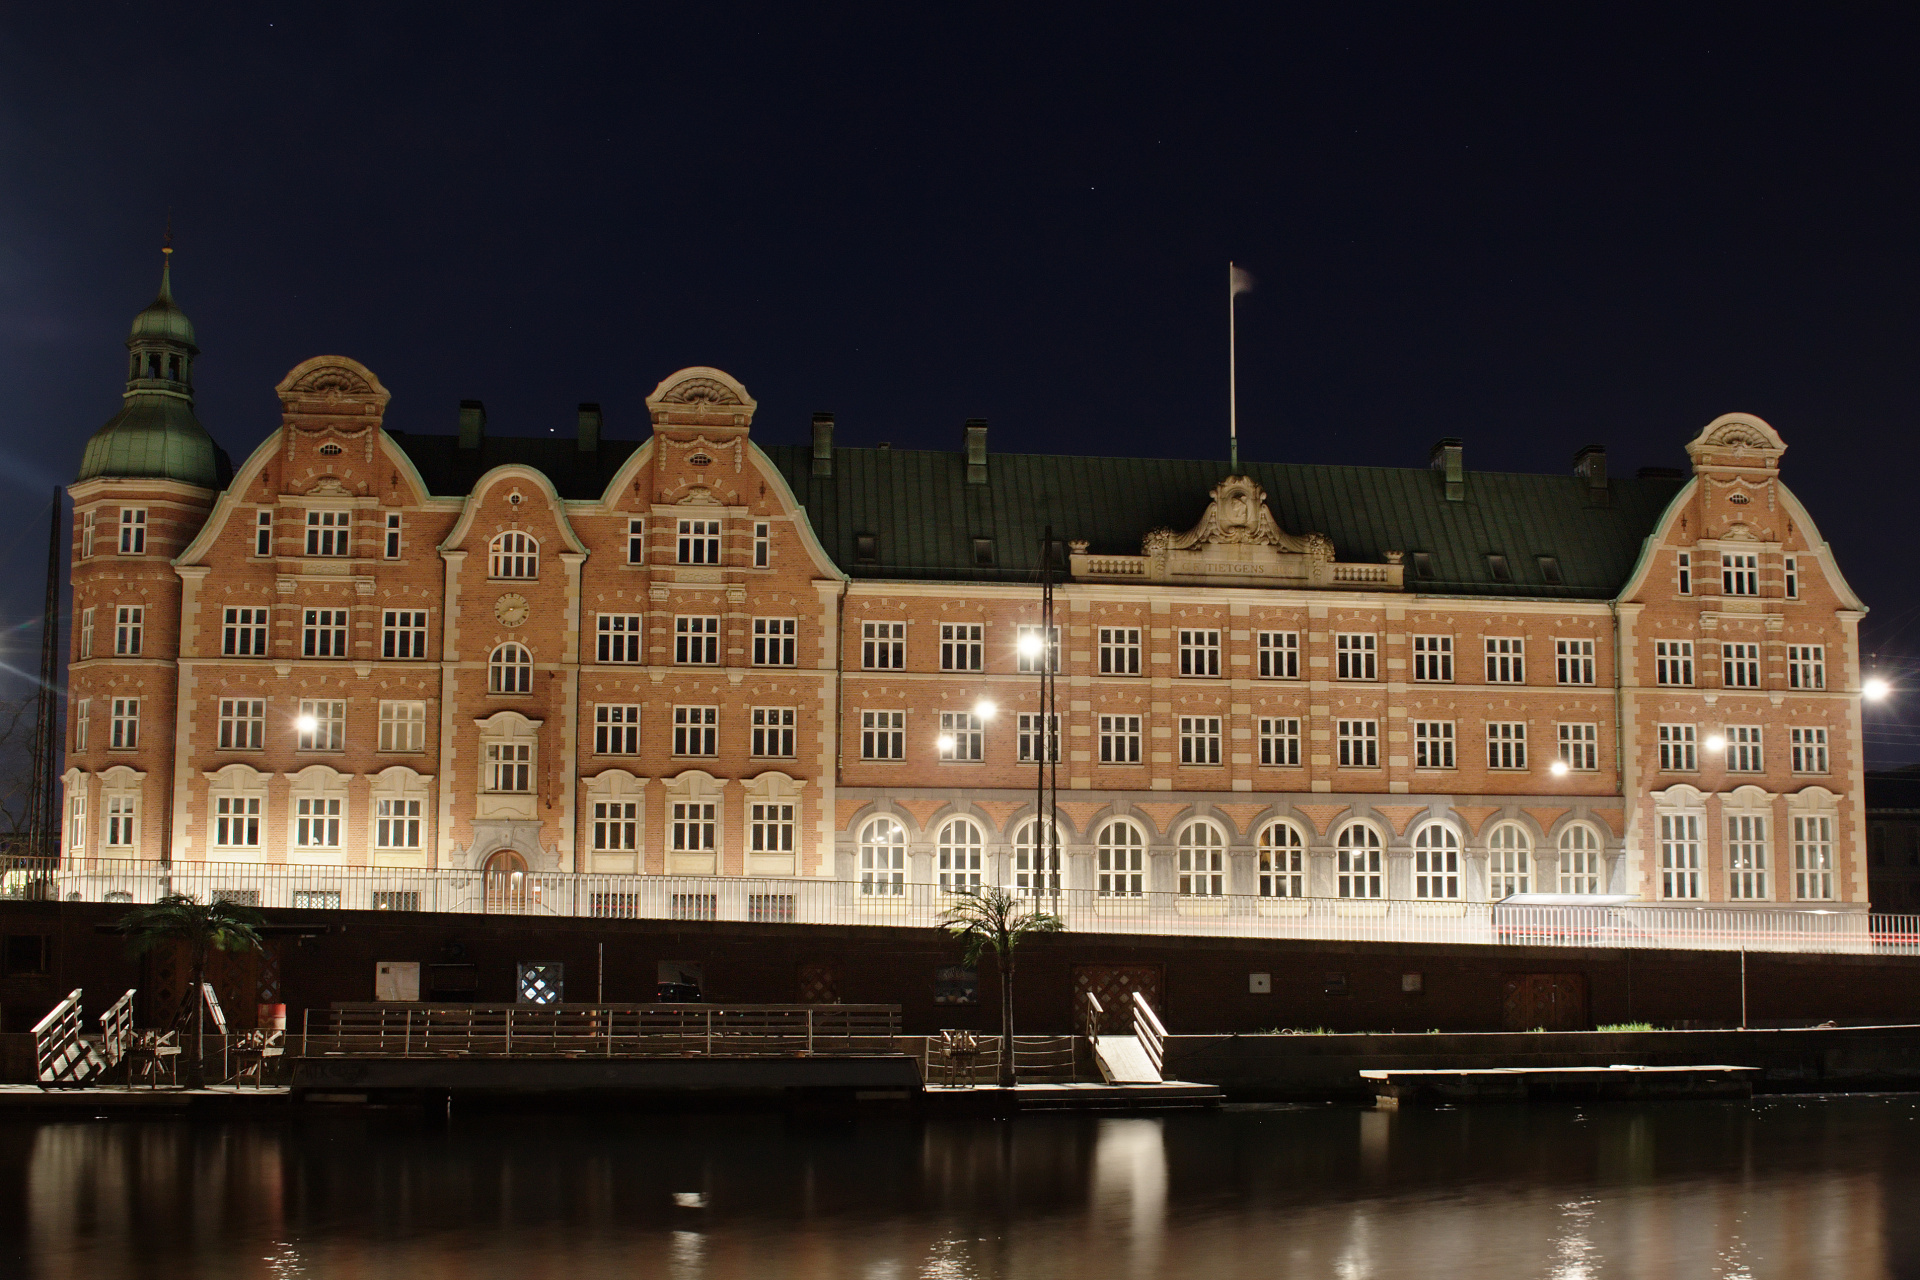 Tietgen's House (Travels » Copenhagen » The City At Night)